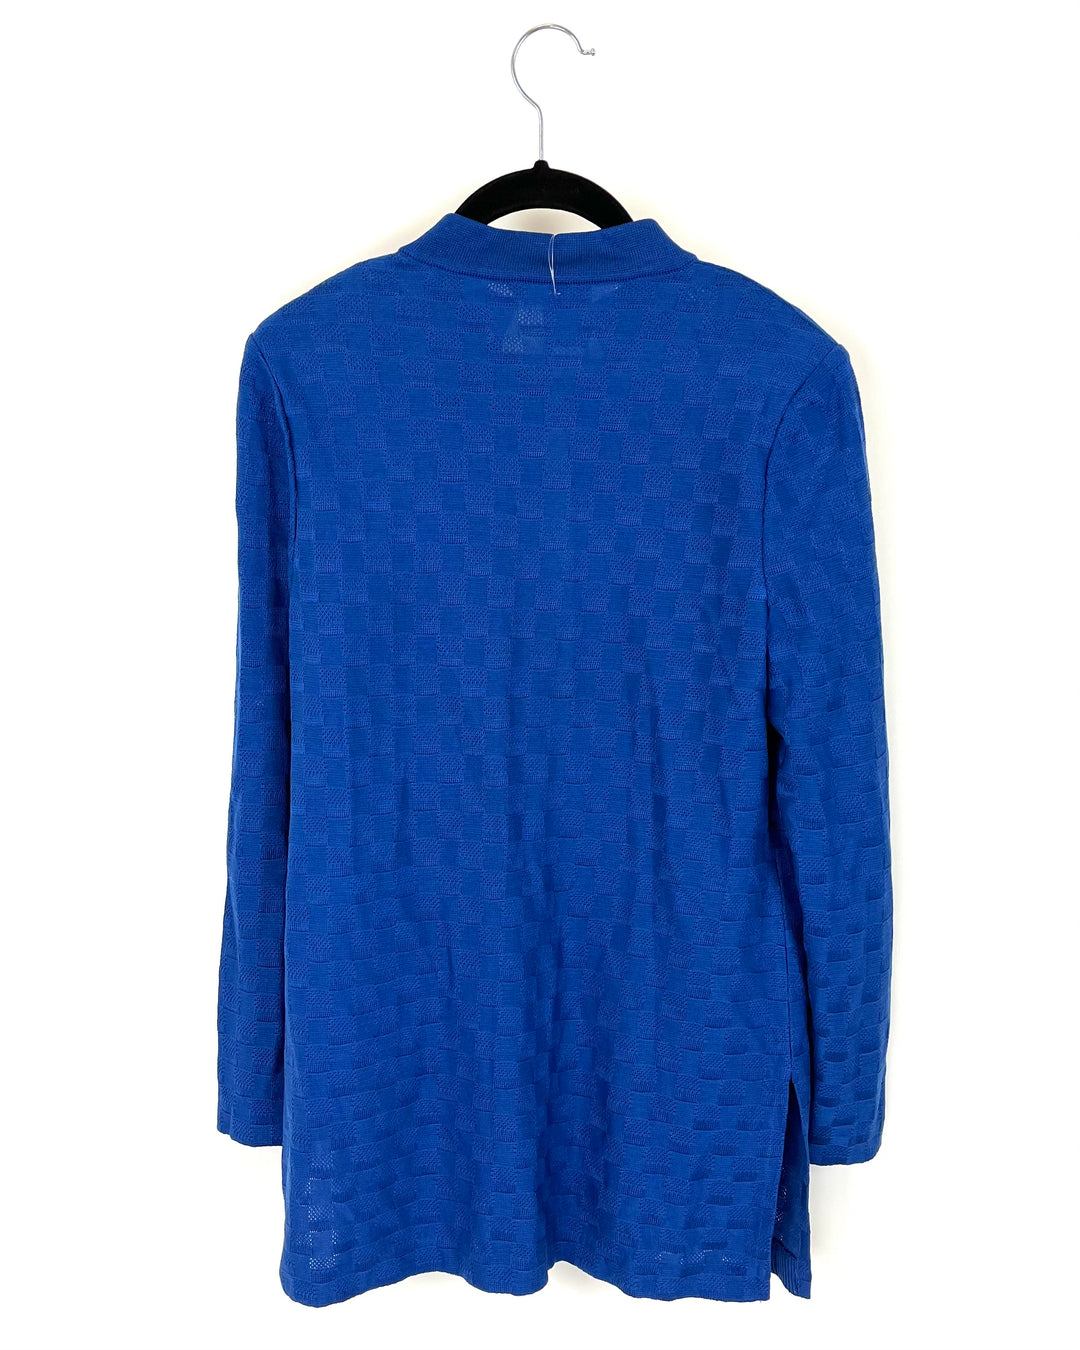 Dark Blue Knit Cardigan - Size 2-4